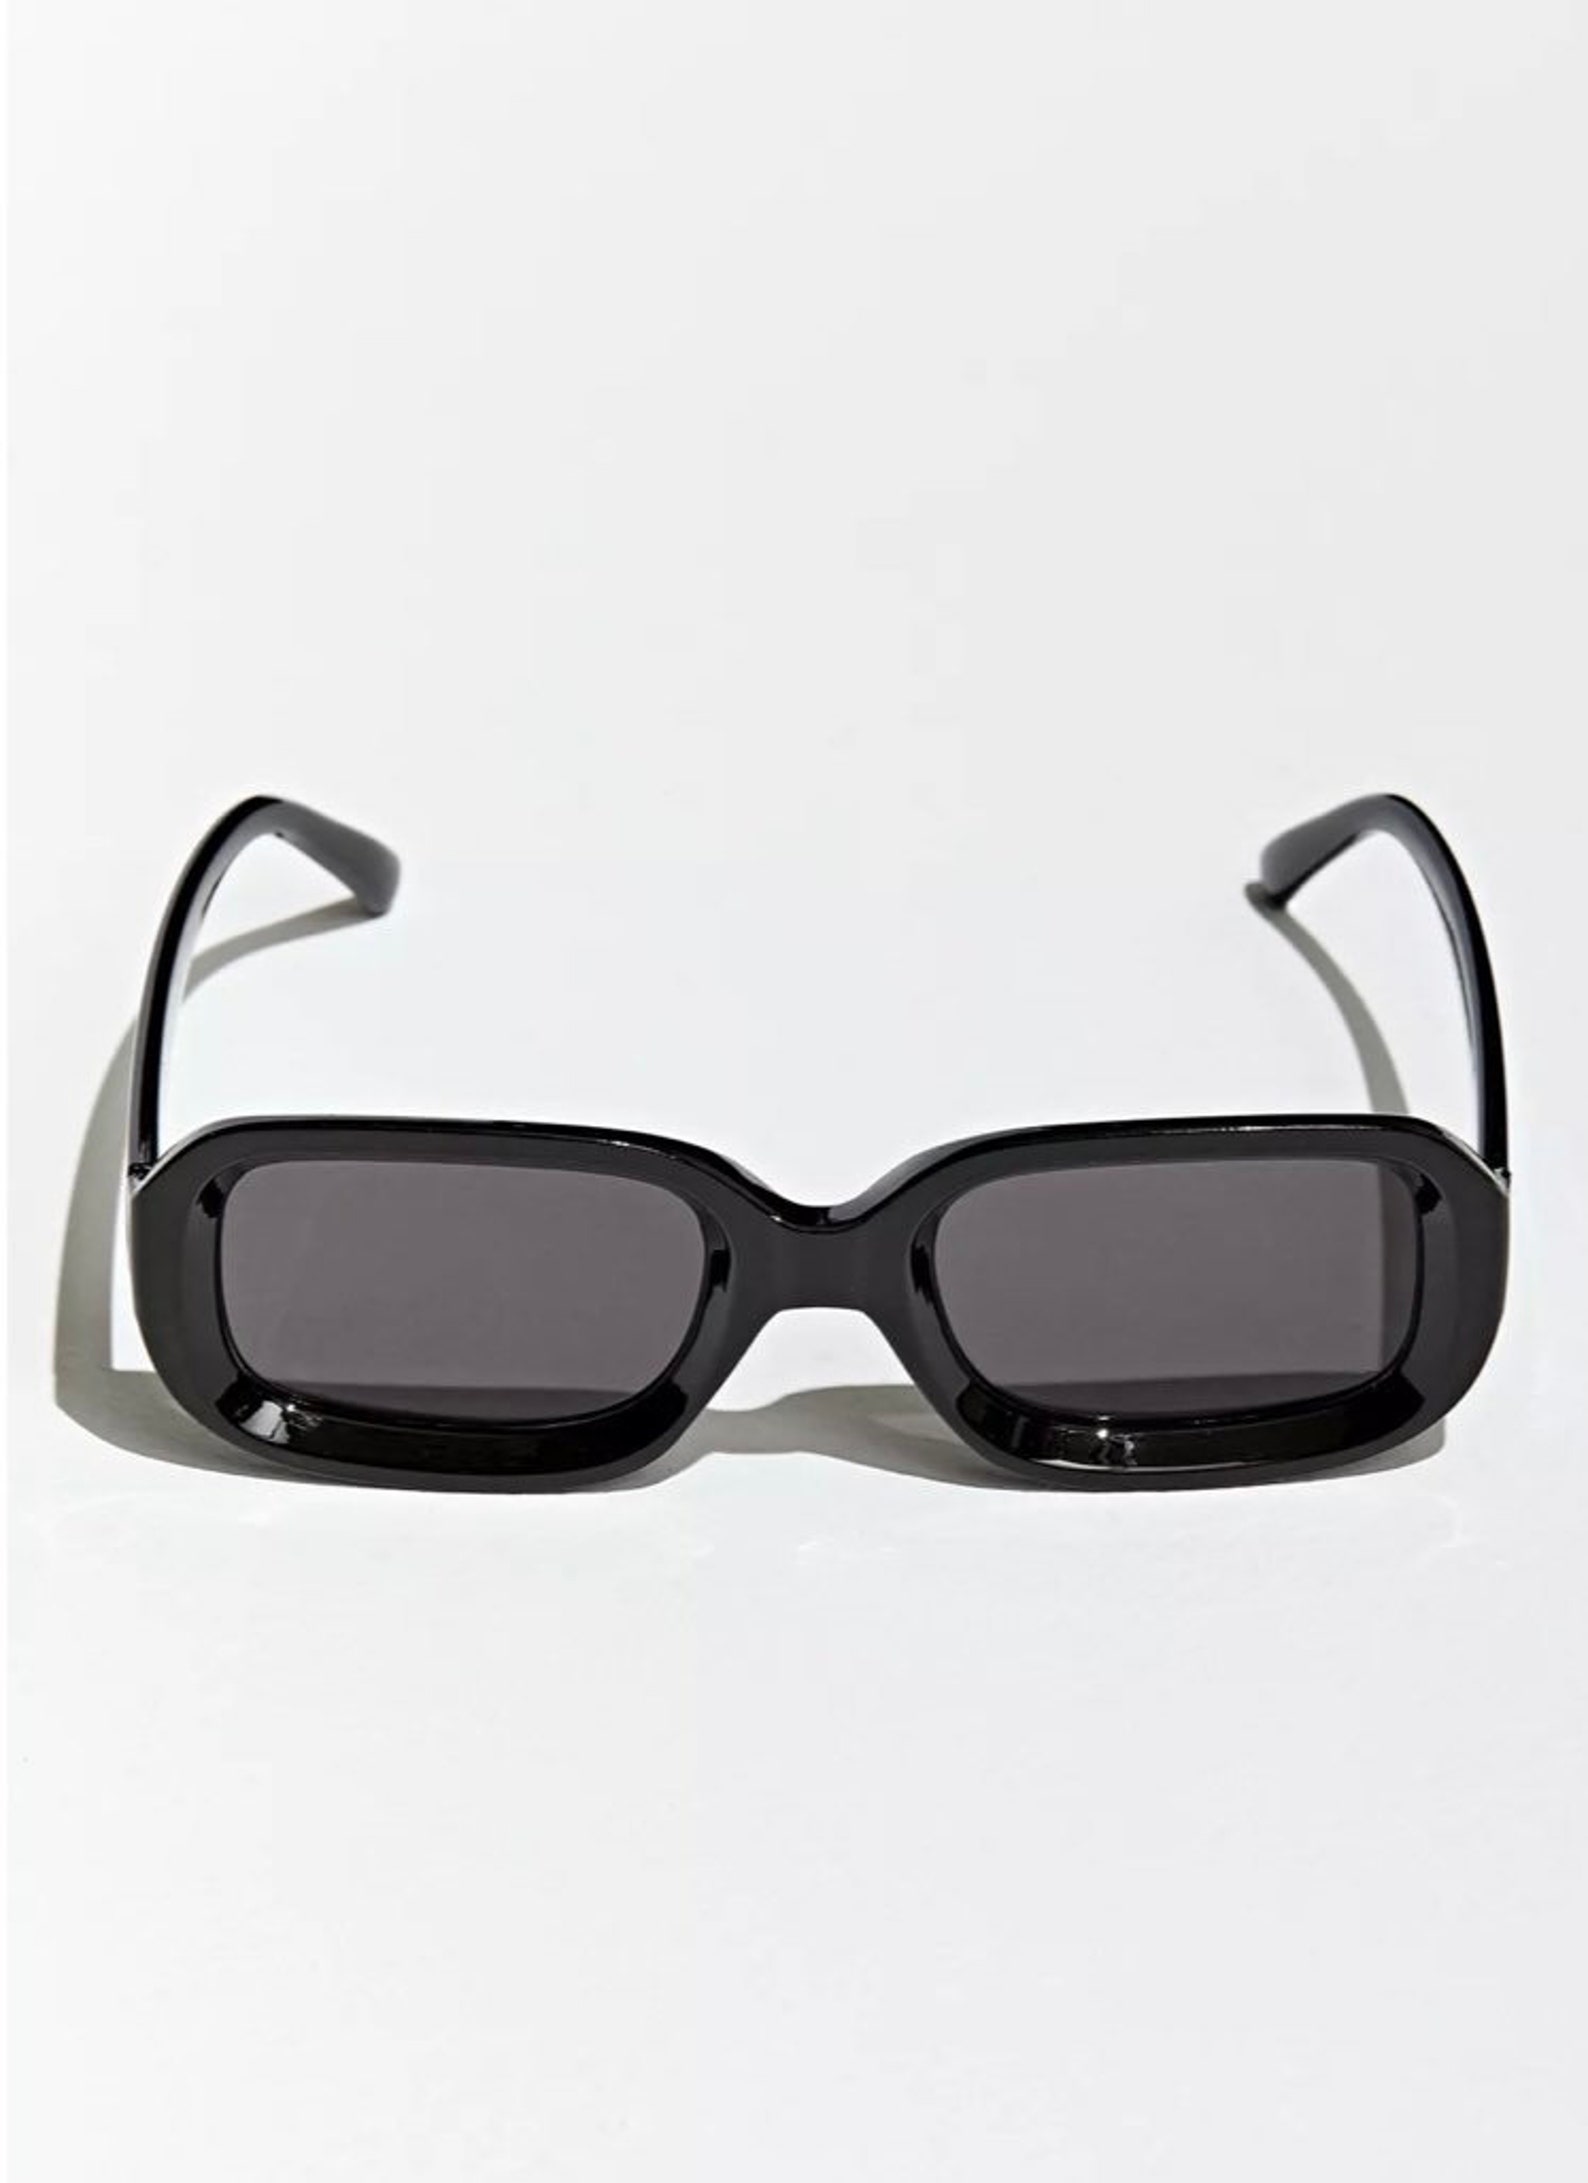 RECTANGLE SUNGLASSES RETRO Sunglasses Brand 90s Sunglasses | Etsy